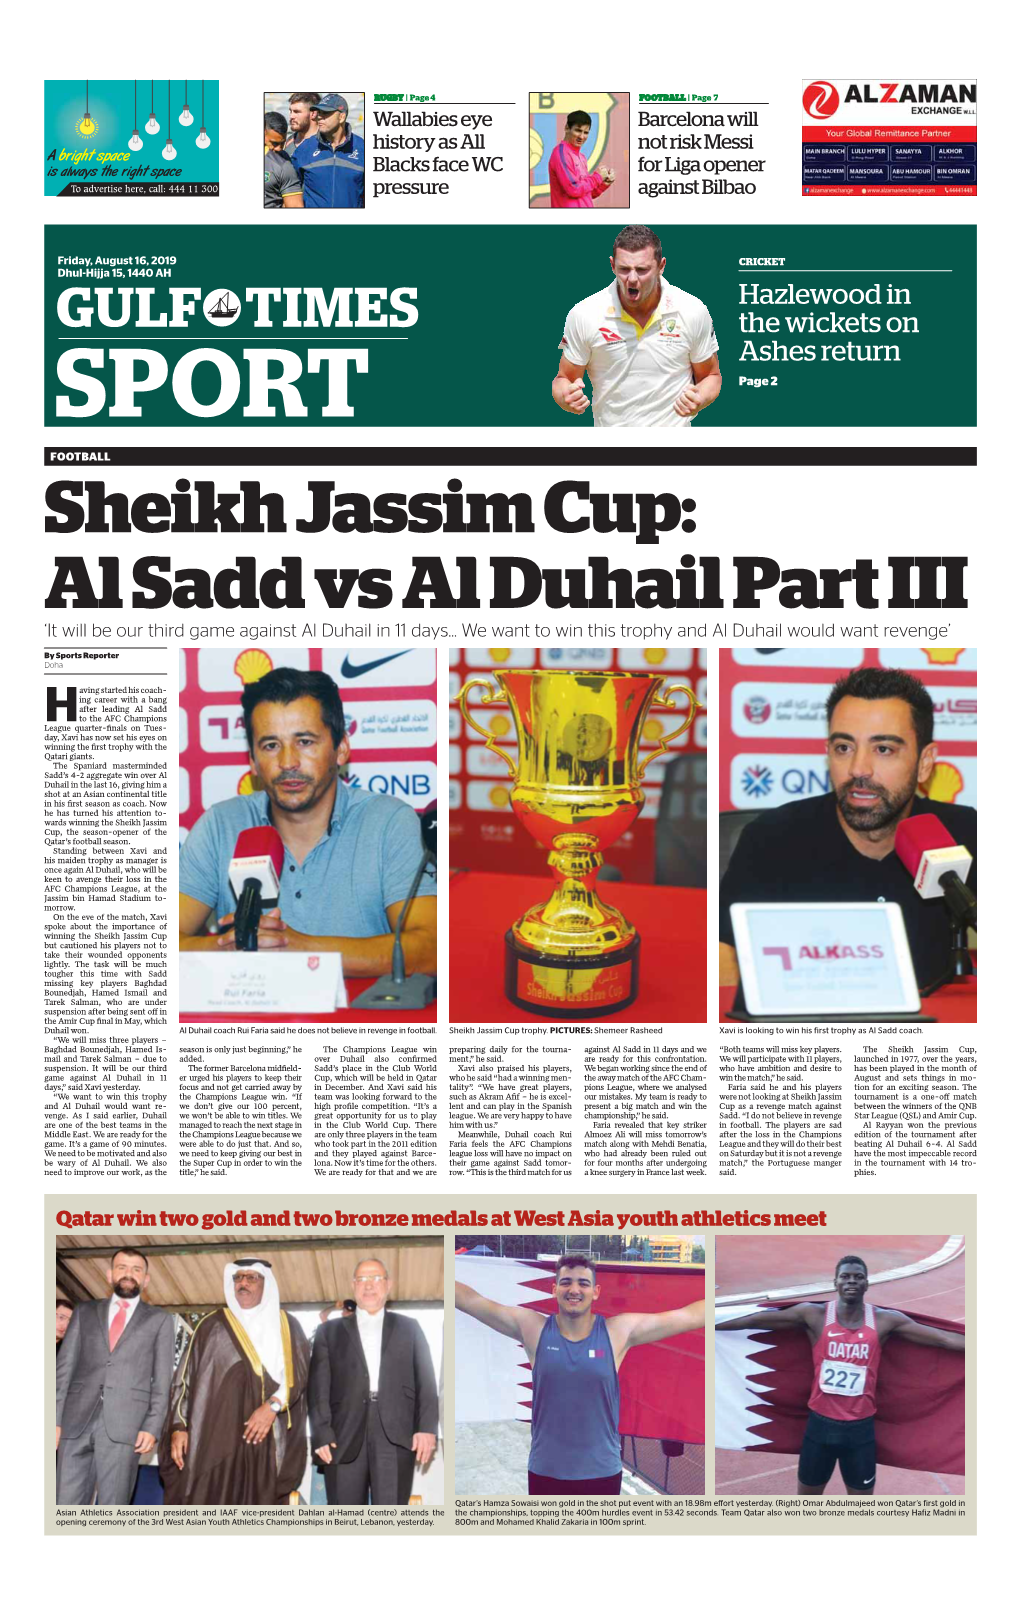 Al Sadd Vs Al Duhail Part III ‘It Will Be Our Third Game Against Al Duhail in 11 Days